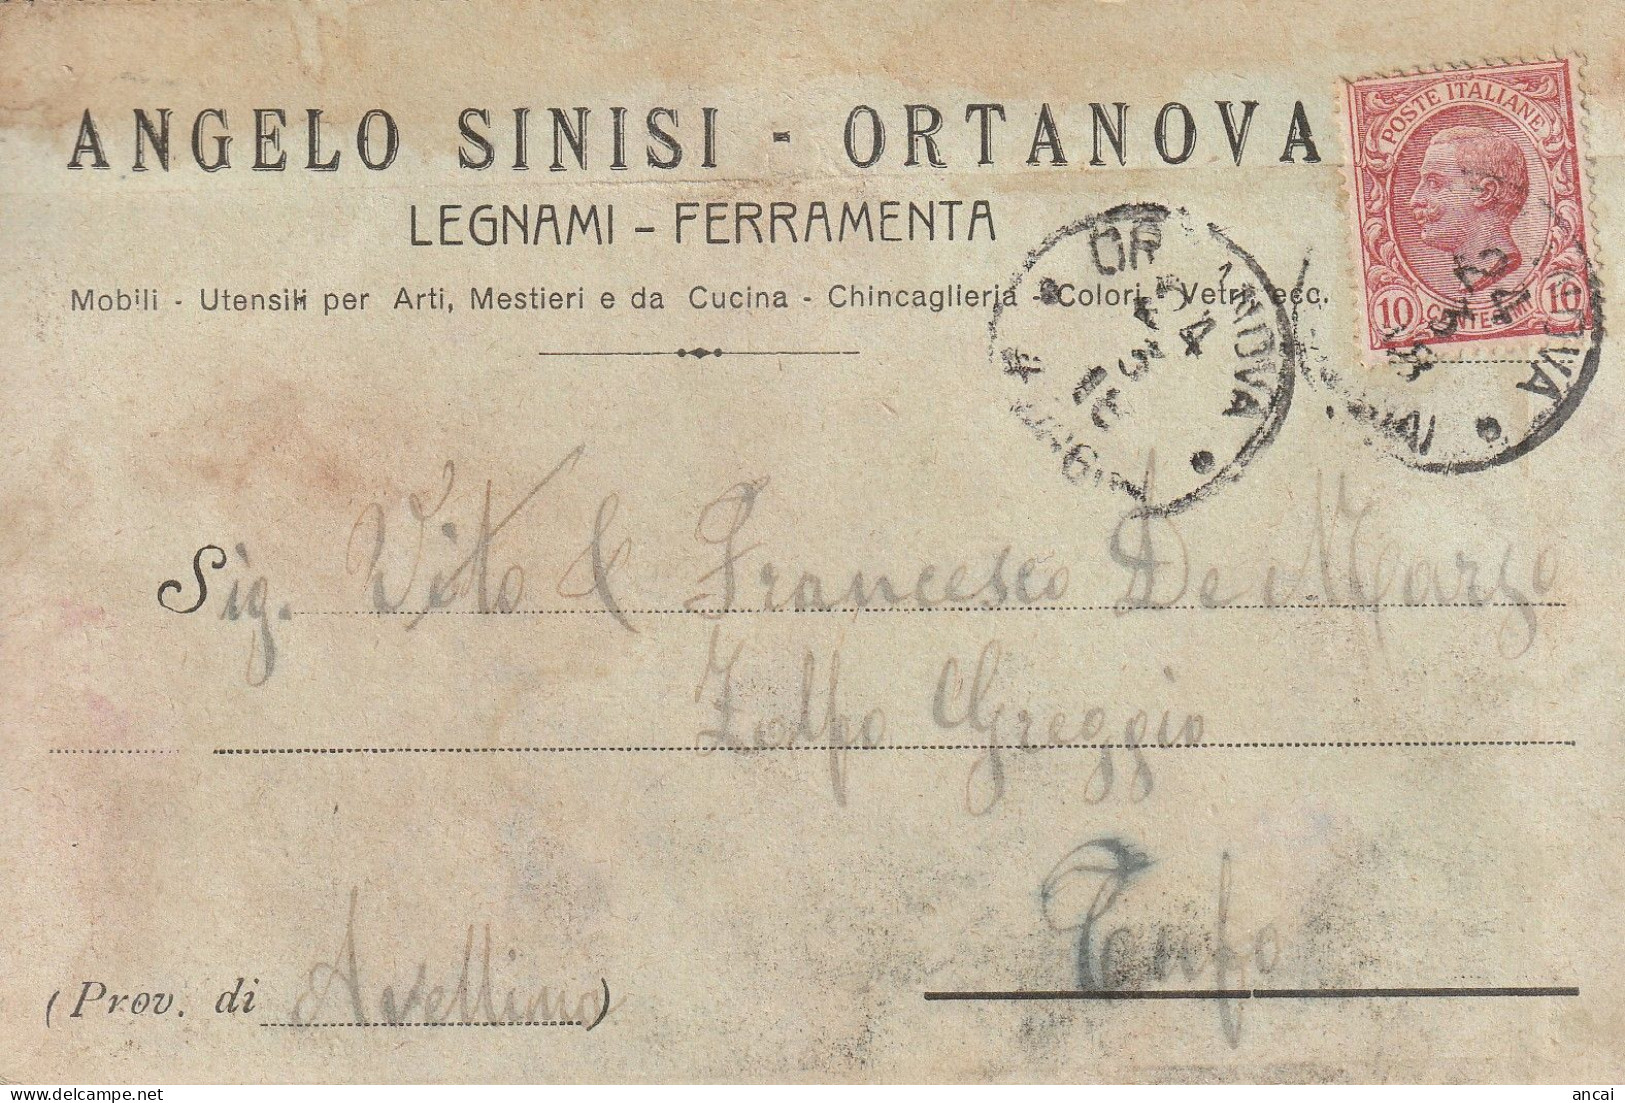 Italy. A215. Ortanova. 1918. Cartolina Postale PUBBLICITARIA ... Legnami - Ferramenta .... - Marcofilie